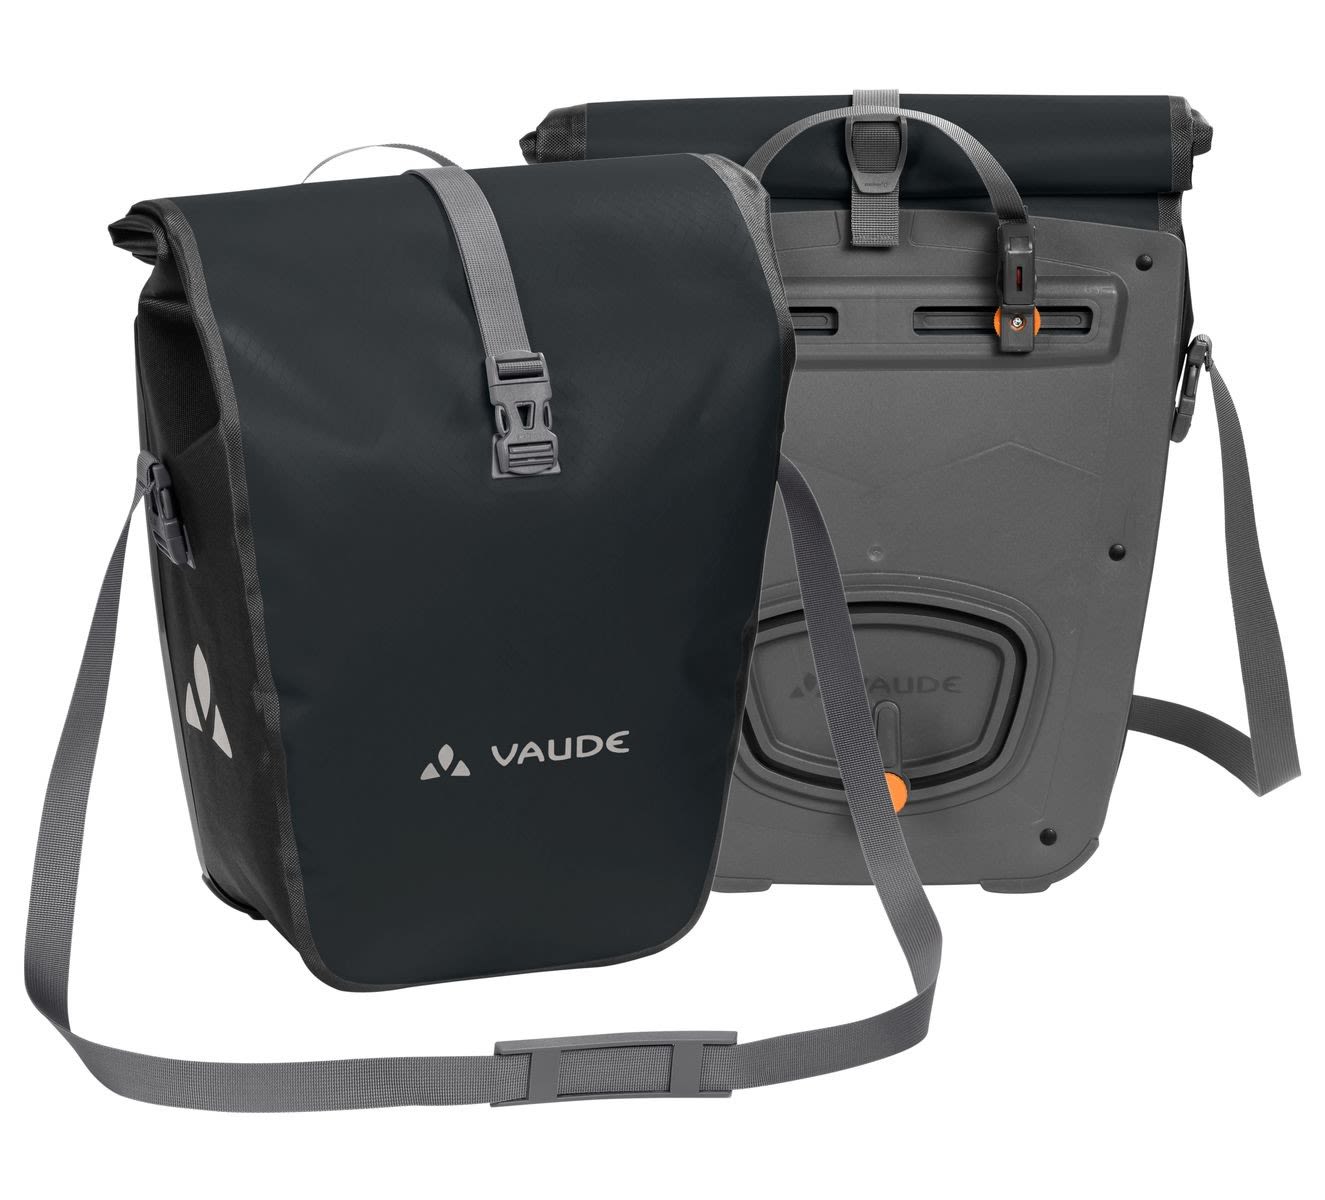 Vaude Aqua Back Schwarz- Fahrradtaschen- Grsse 48l - Farbe Black unter Vaude